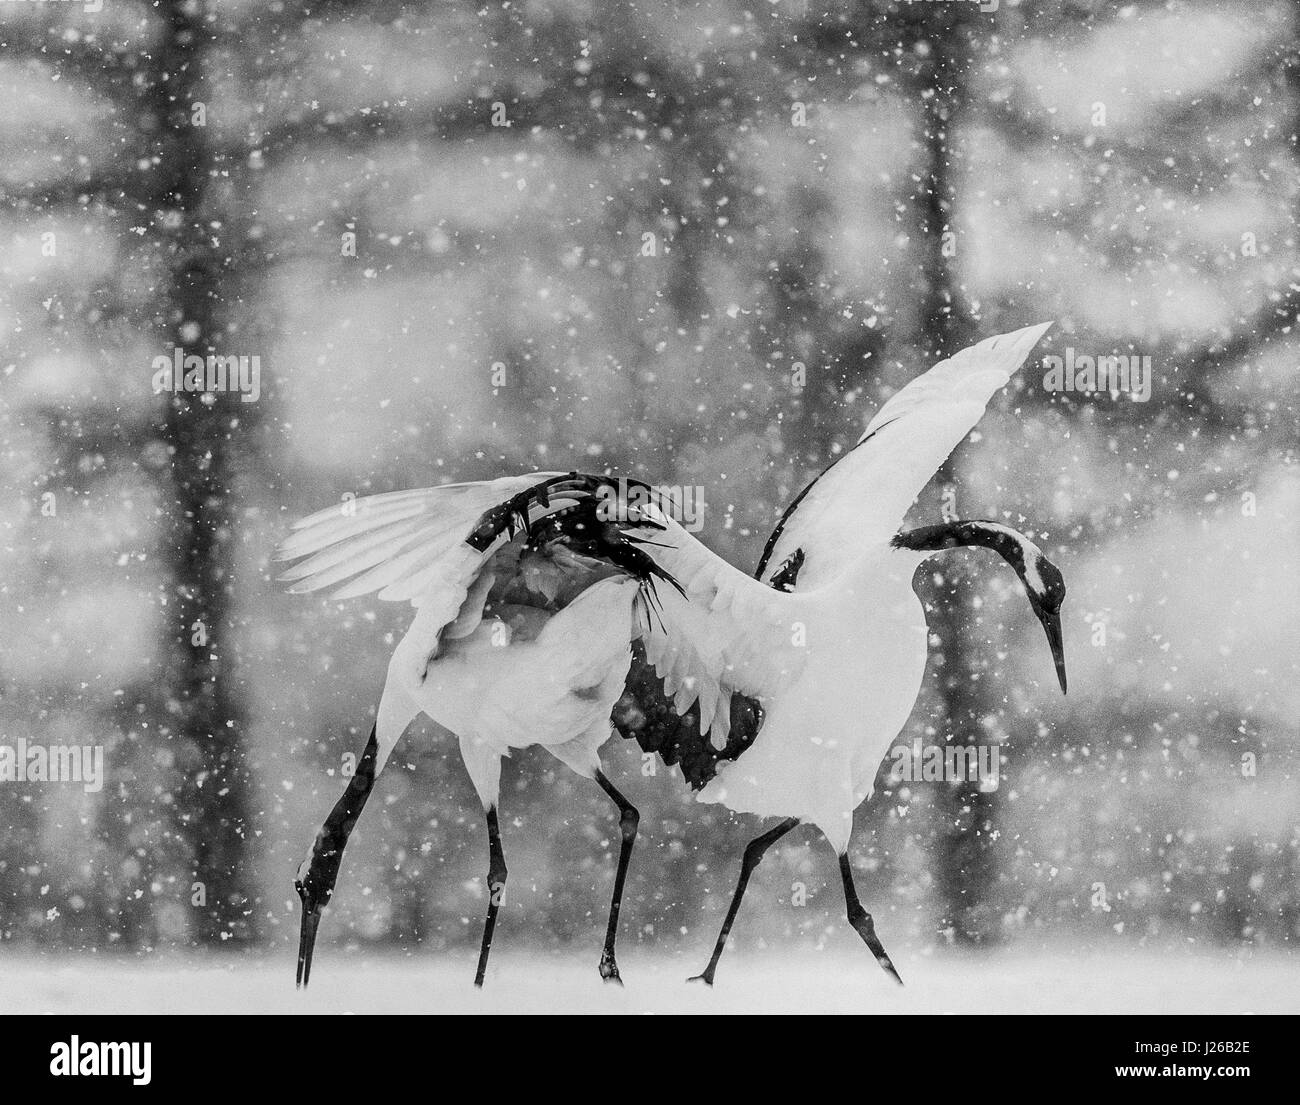 Two Japanese cranes stand in the snow. Japan. Hokkaido. Tsurui. Great illustration. Stock Photo